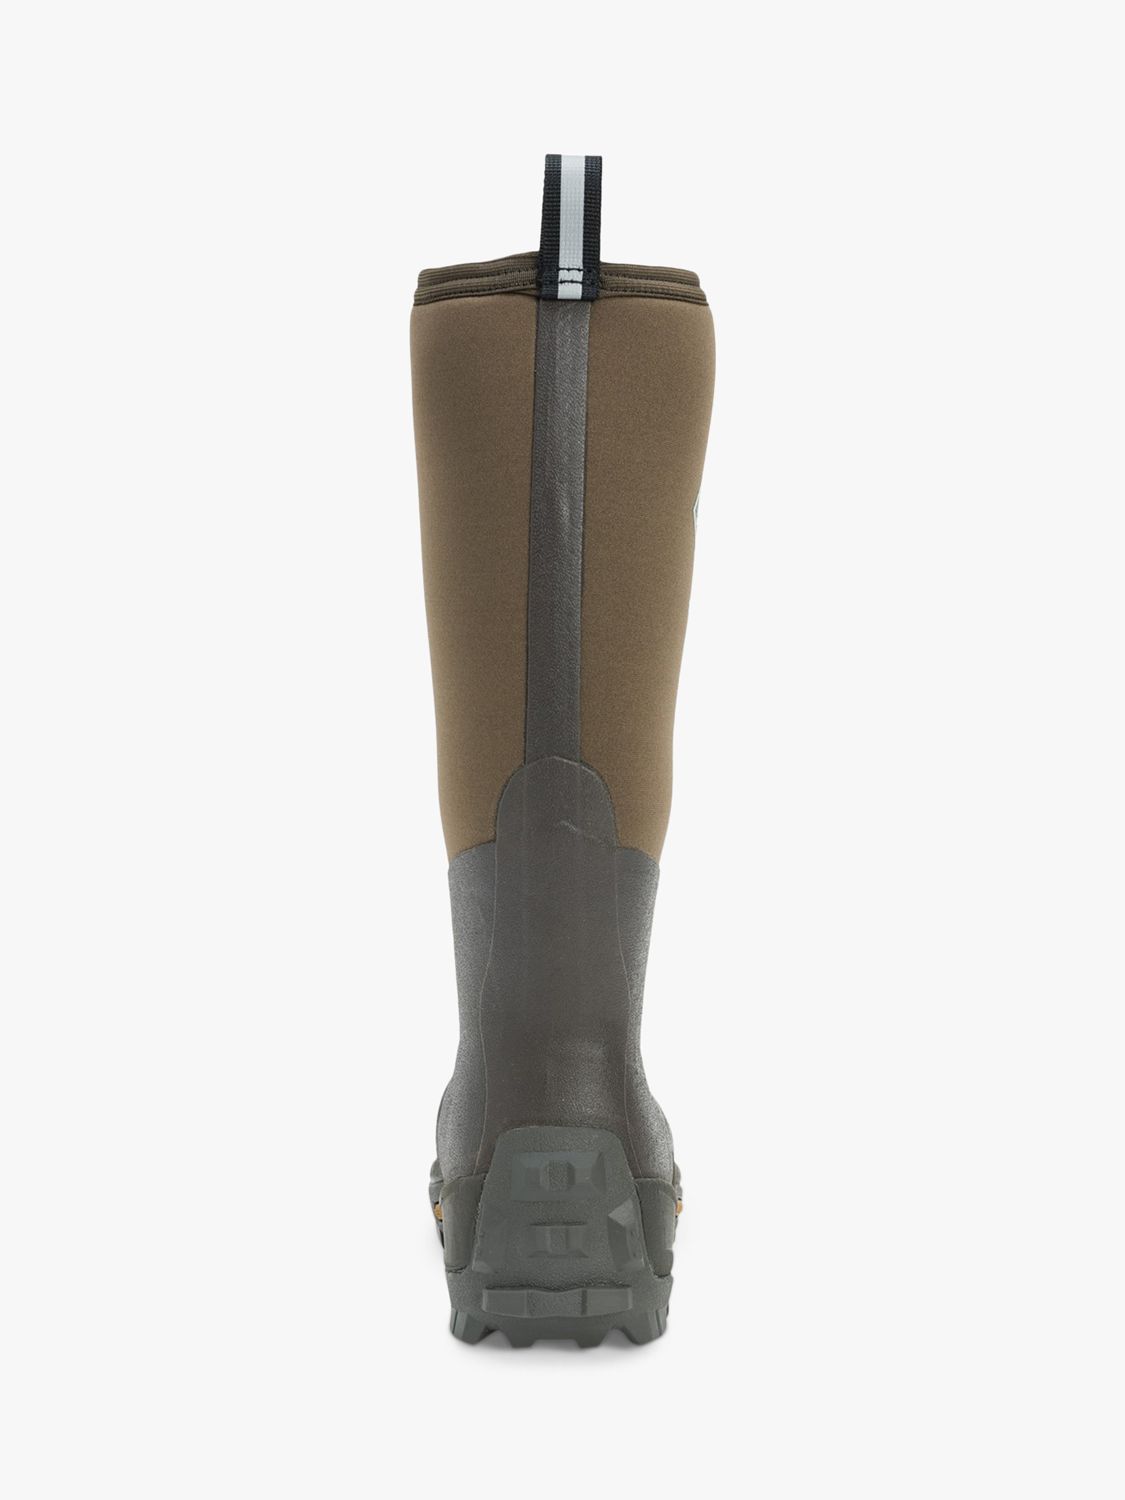 Muck Wetland Tall Wellington Boots, Brown, 4